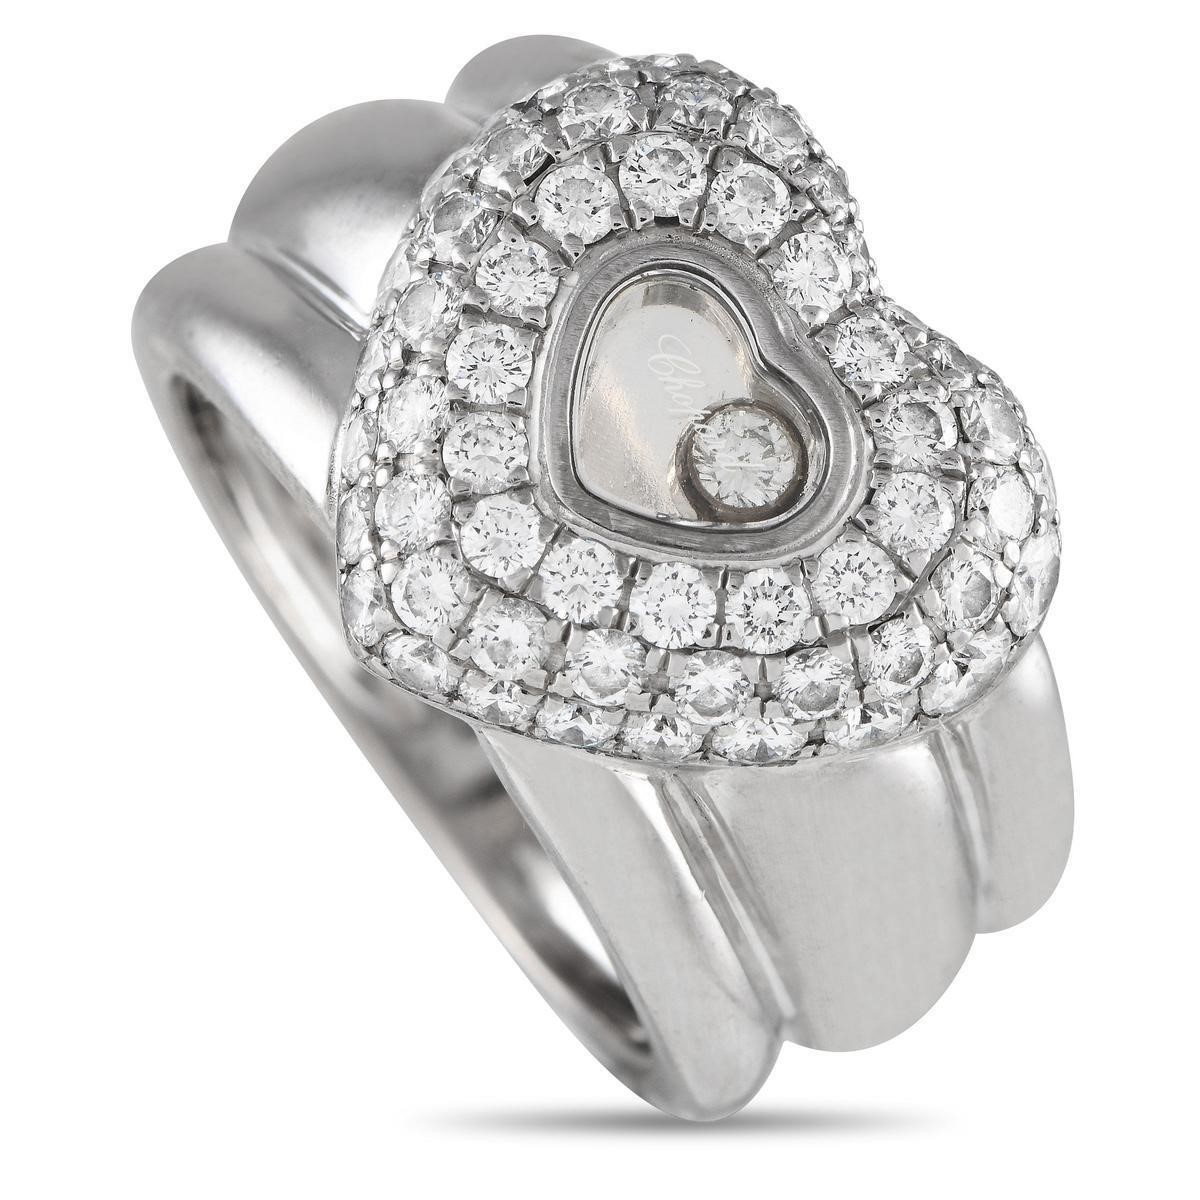 Chopard 18K White Gold 1.0ct Diamond Heart Ring